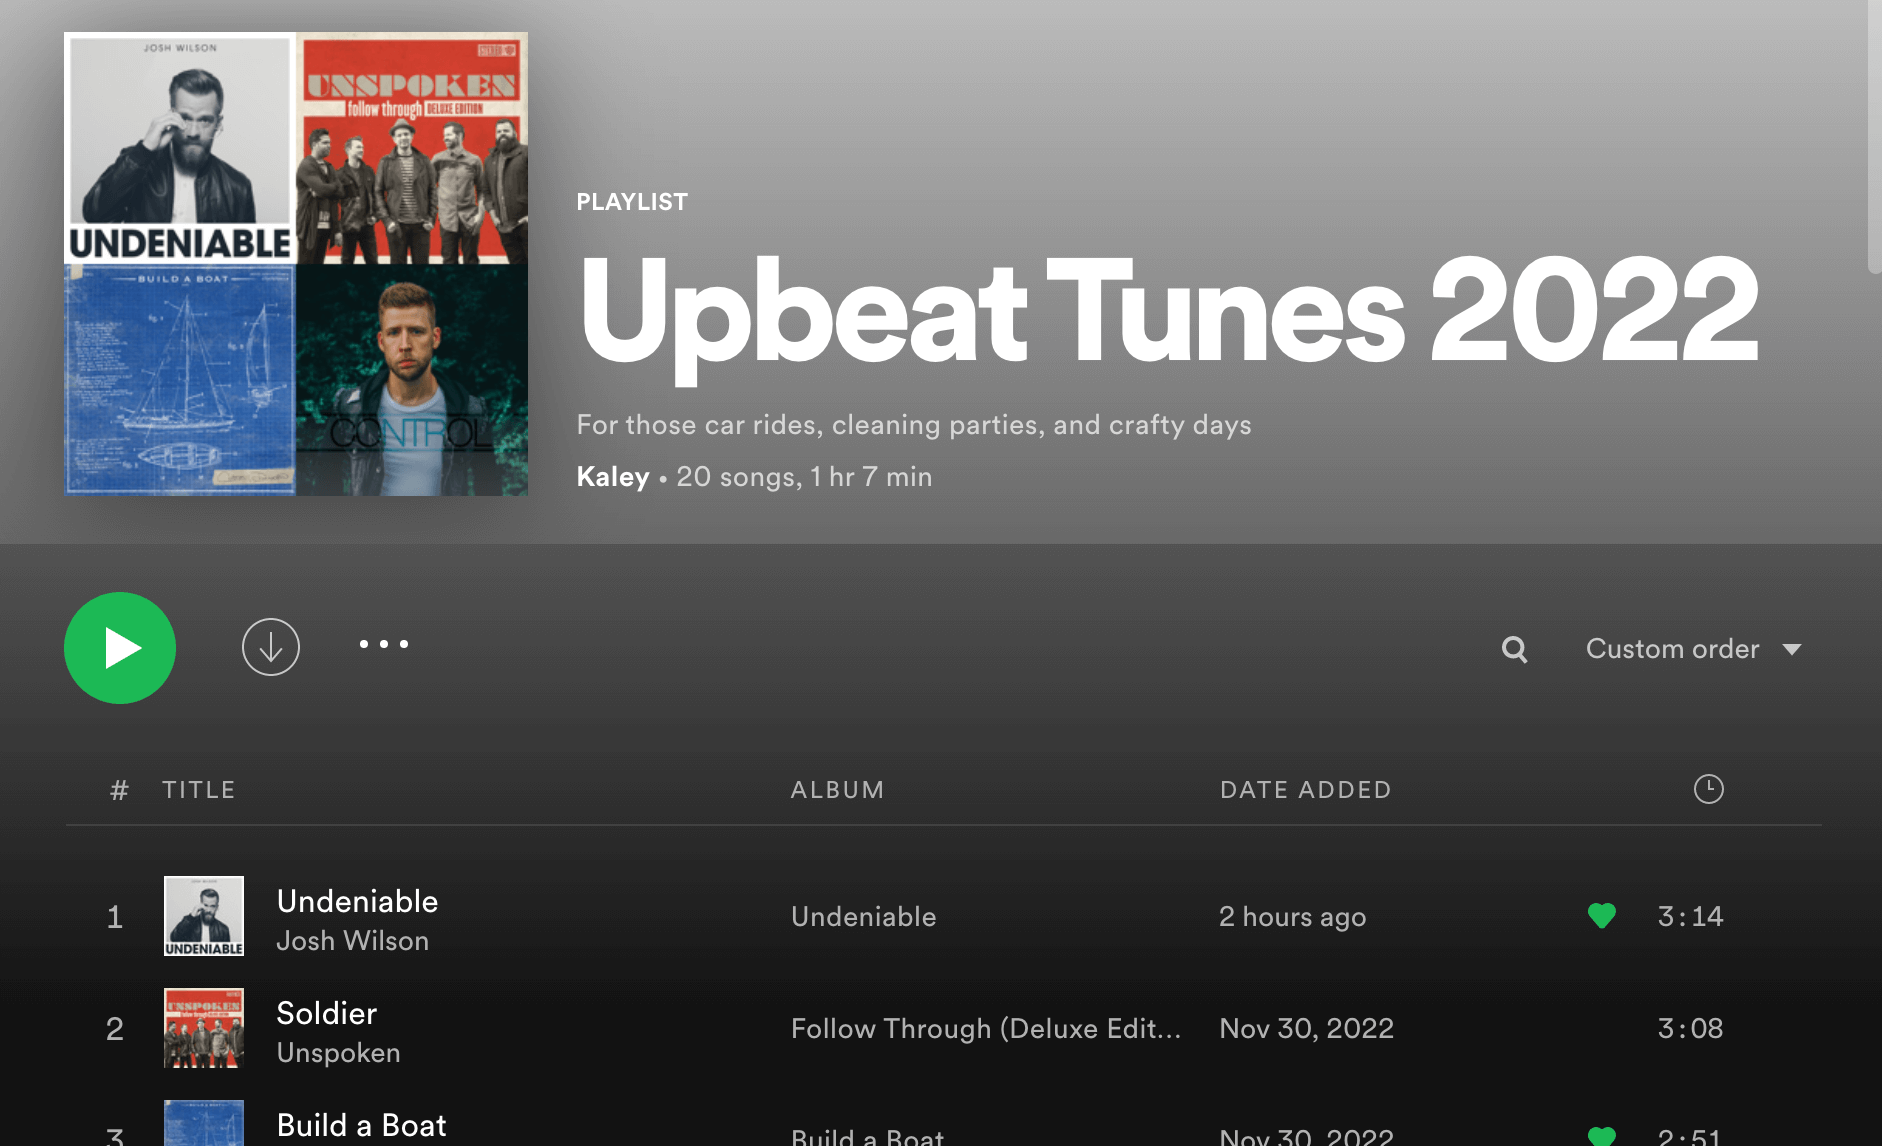 Screenshot of spotify playlist titled "Upbeat Tunes 2022"